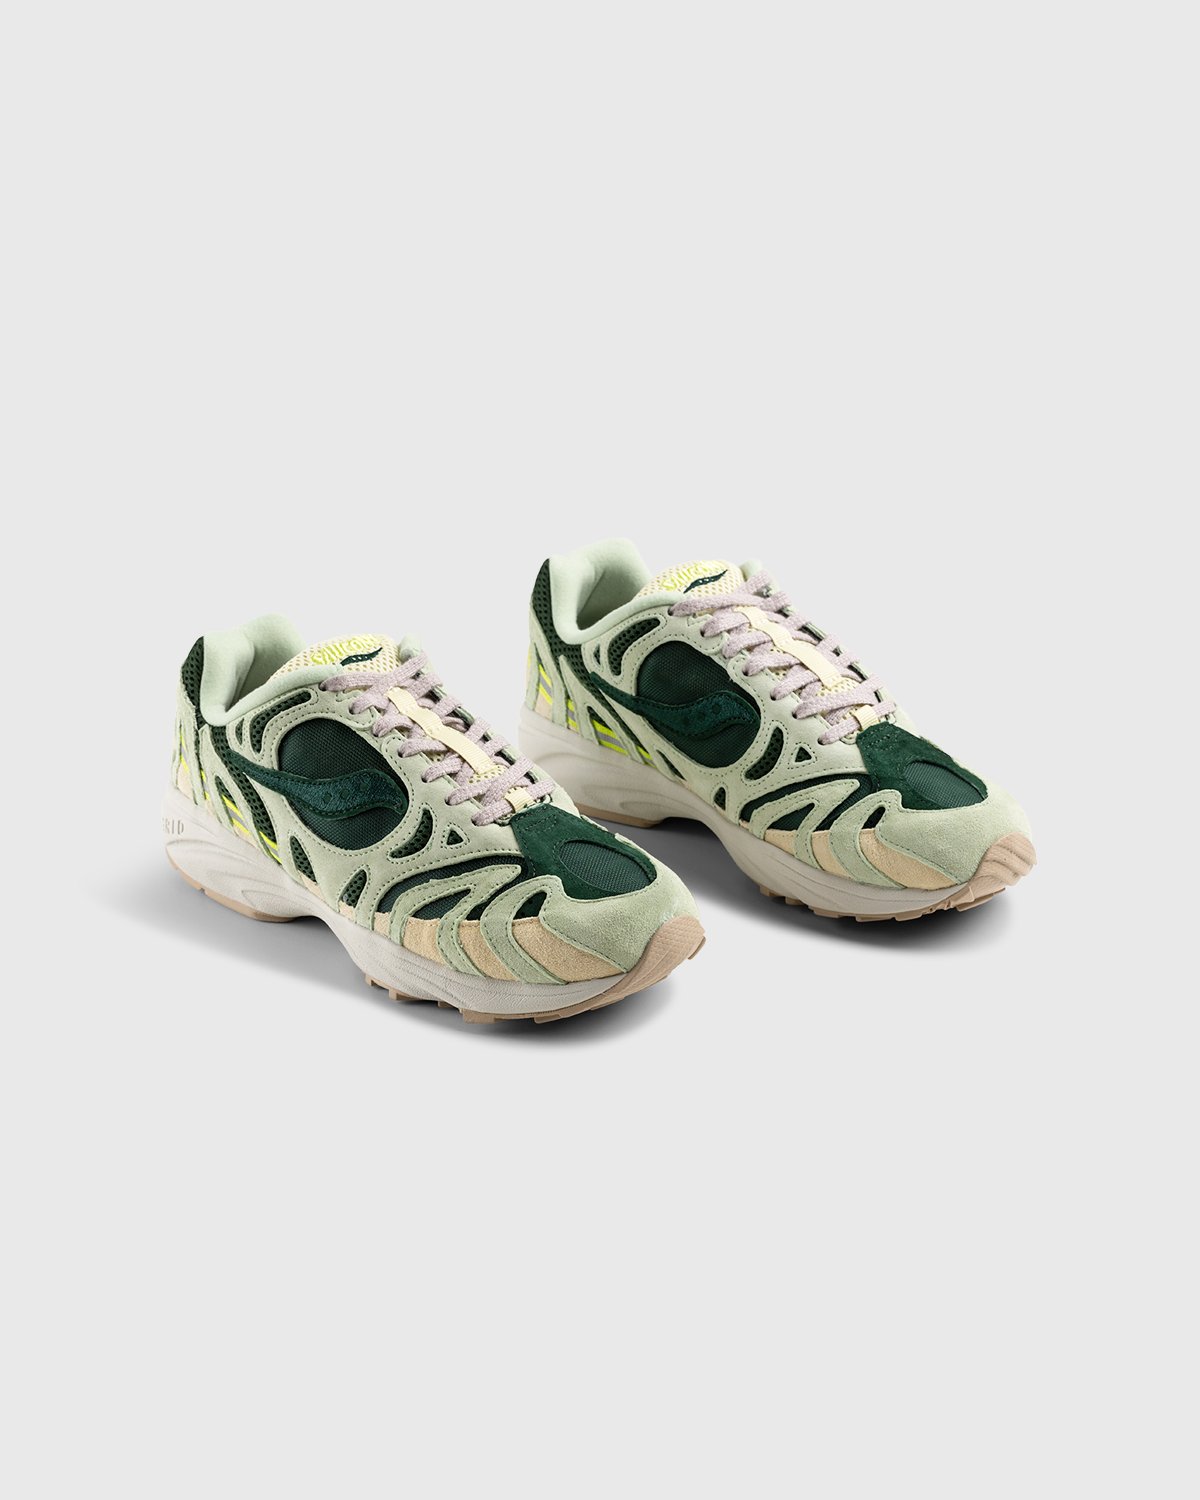 Saucony - Grid Azura 2000 Green - Footwear - Green - Image 4